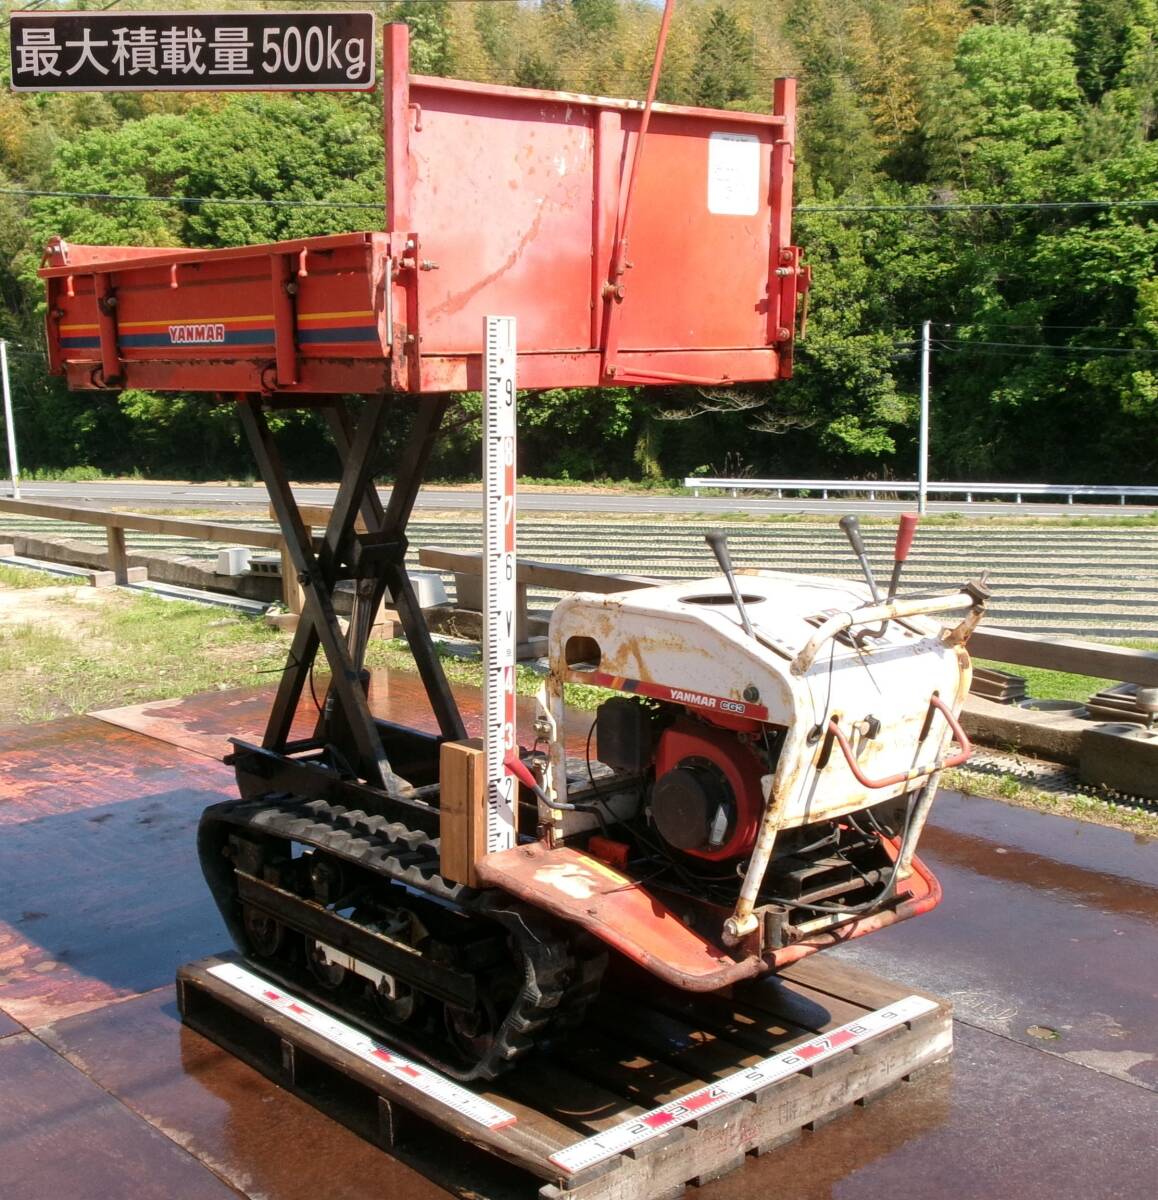 067# Yanmar lift dump transportation car CG3 500kg Hiroshima #